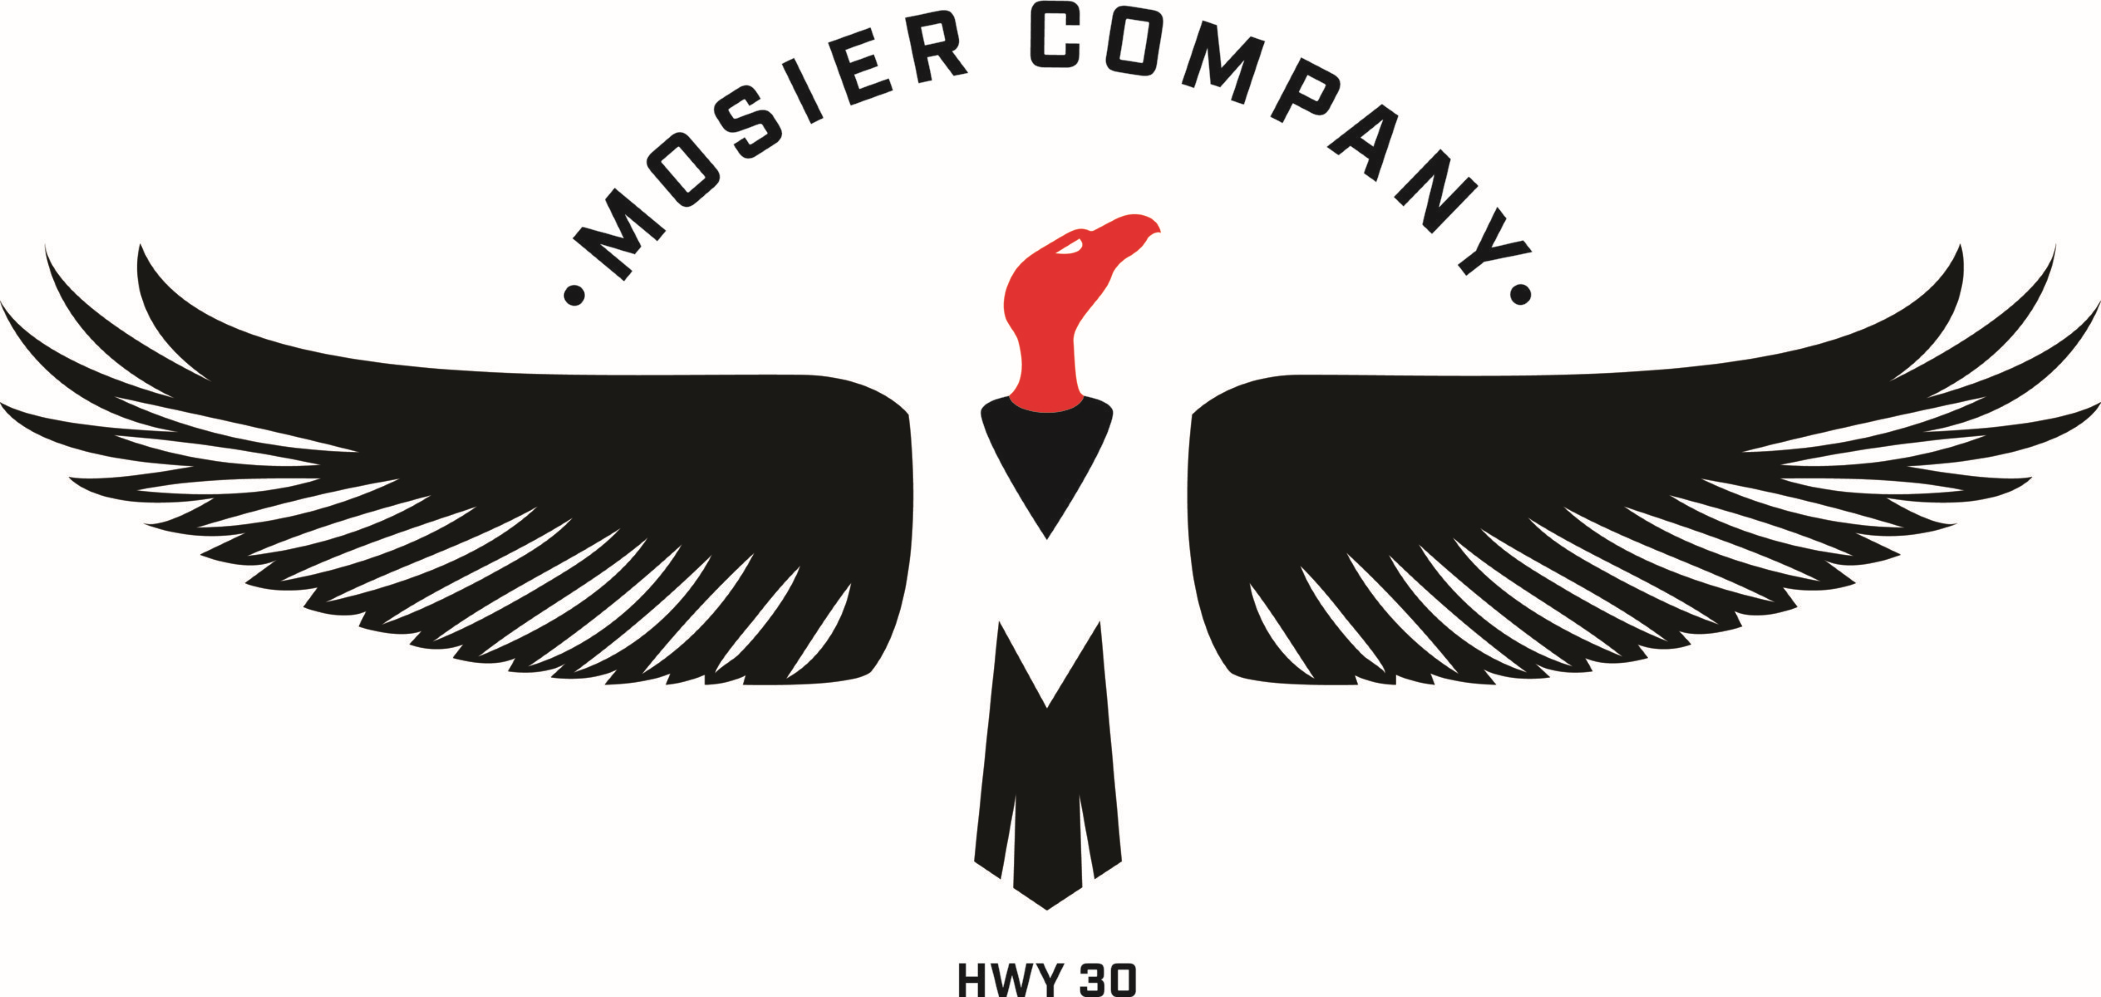 Mosier Company Mosier Oregon